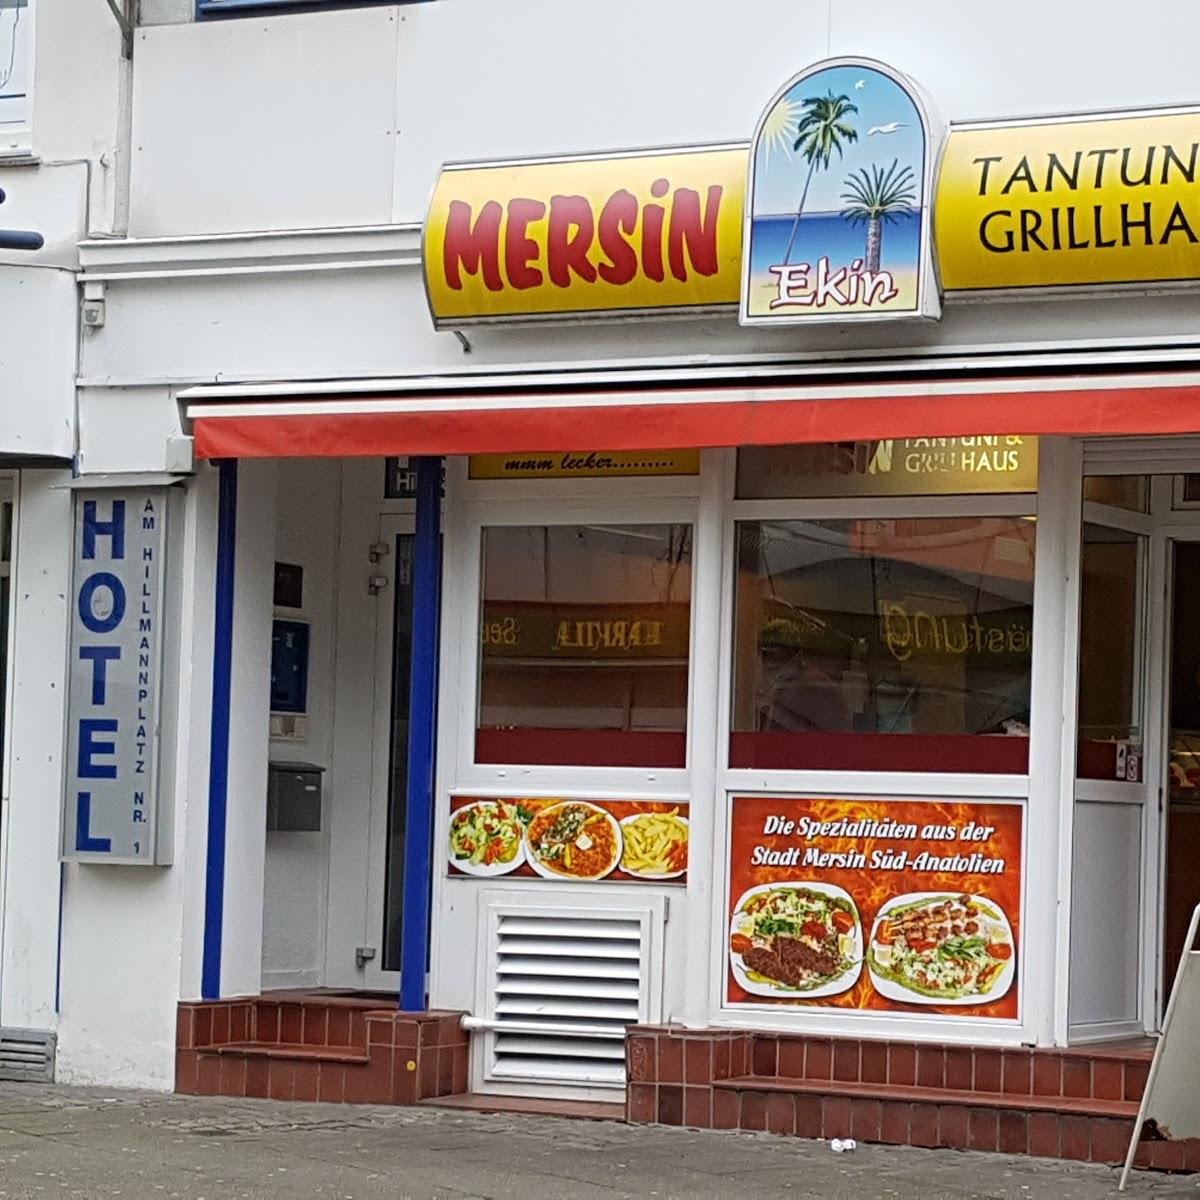 Restaurant "Mersin Tantuni & Grillhaus" in Bremen